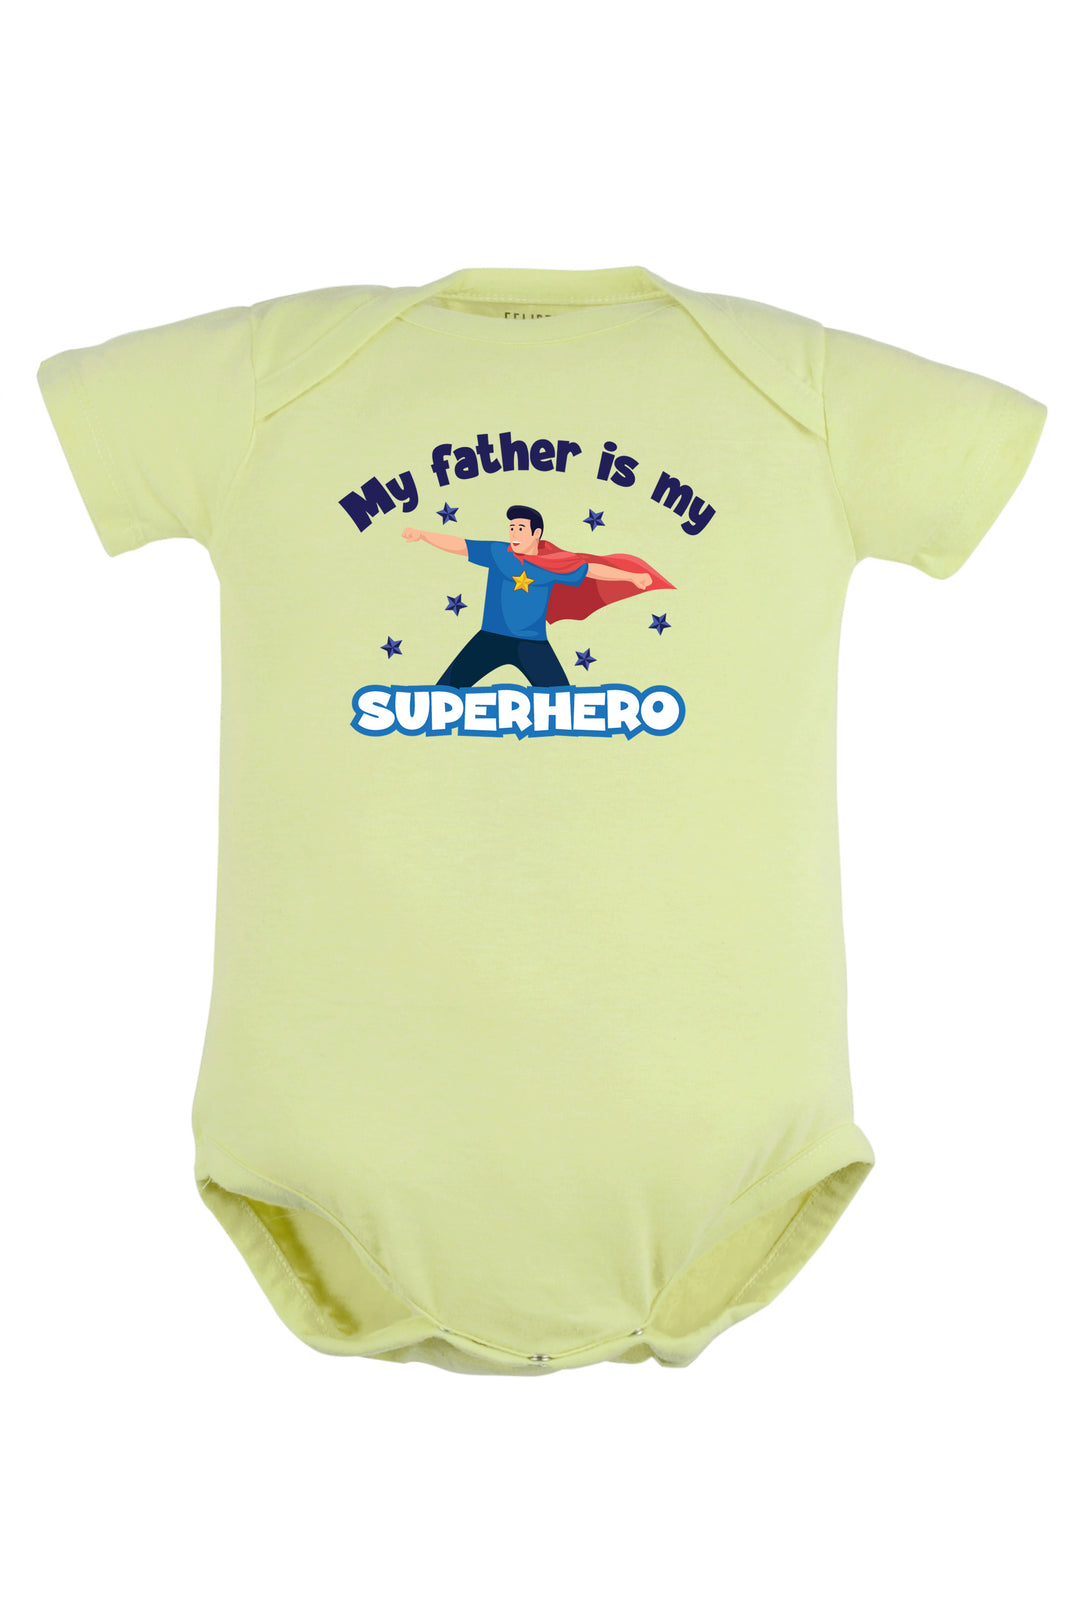 My Father Is My Superhero Baby Romper | Onesies